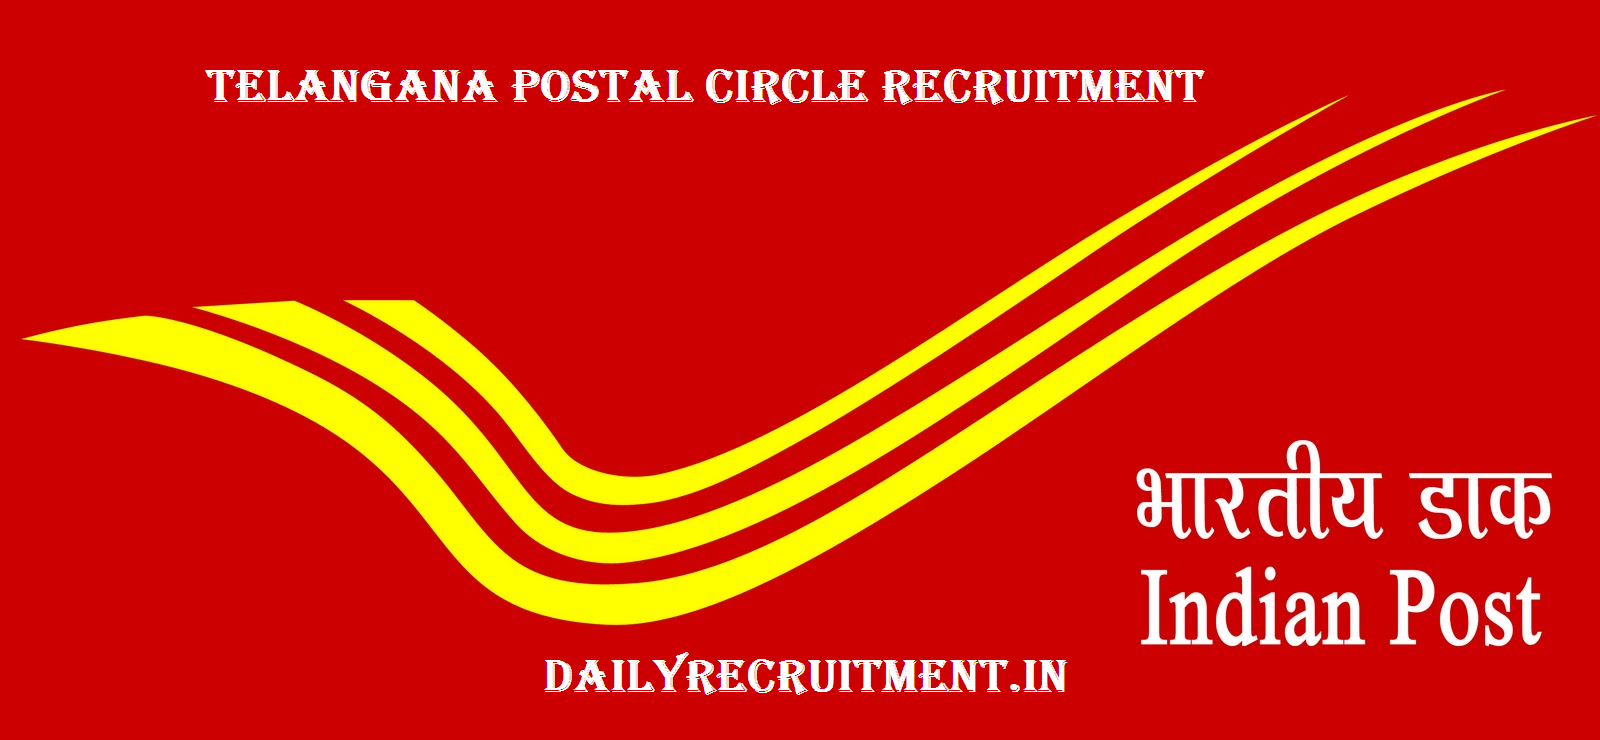 Telangana Postal Circle Recruitment 2020